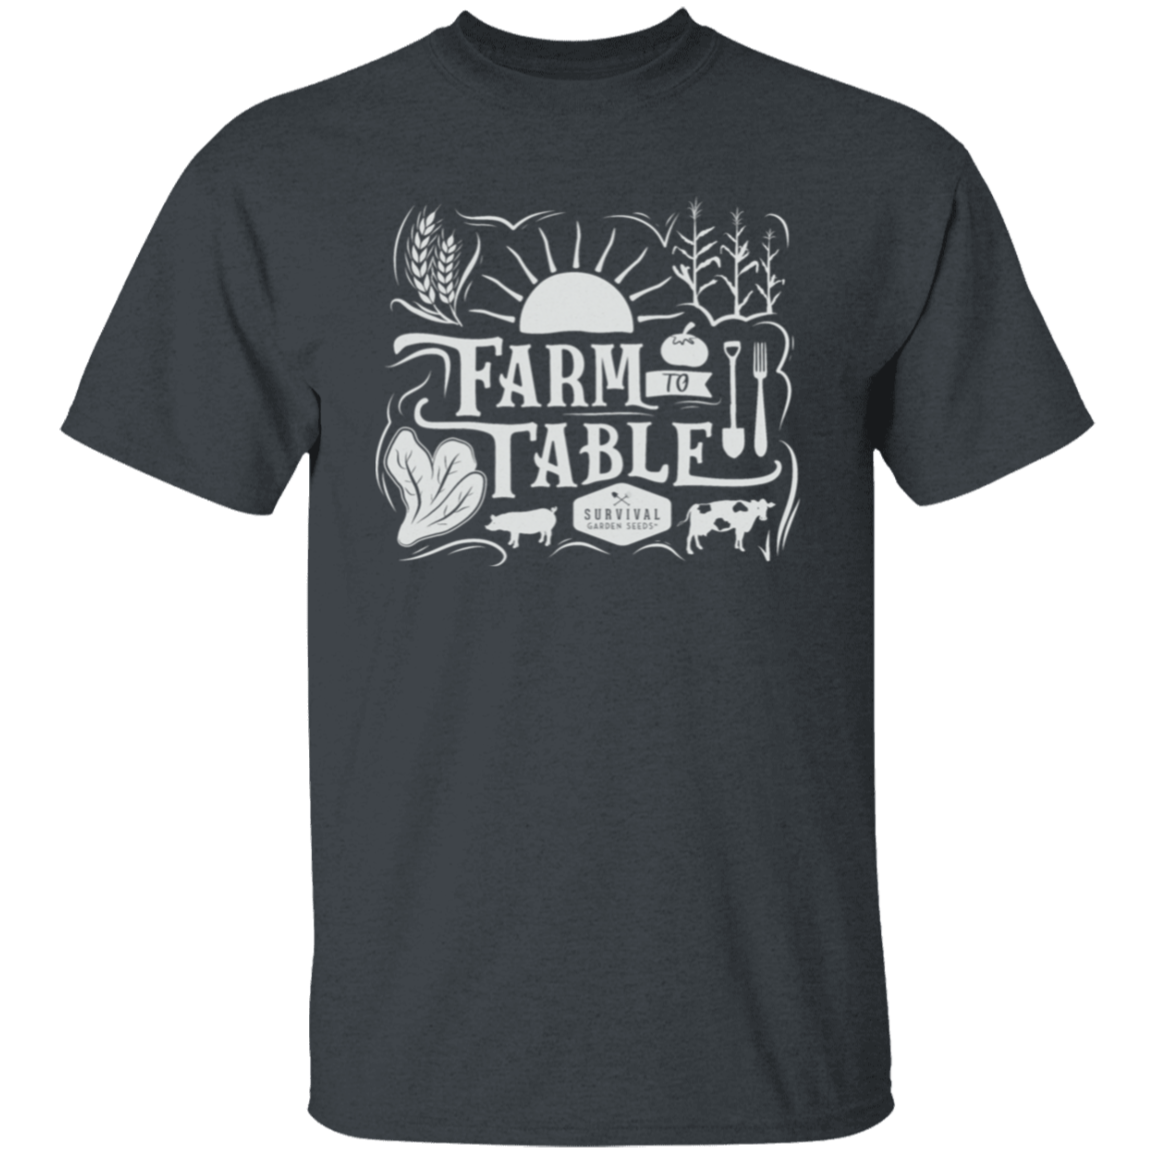 Unisex Short-Sleeve T-shirt - Farm to Table (white)